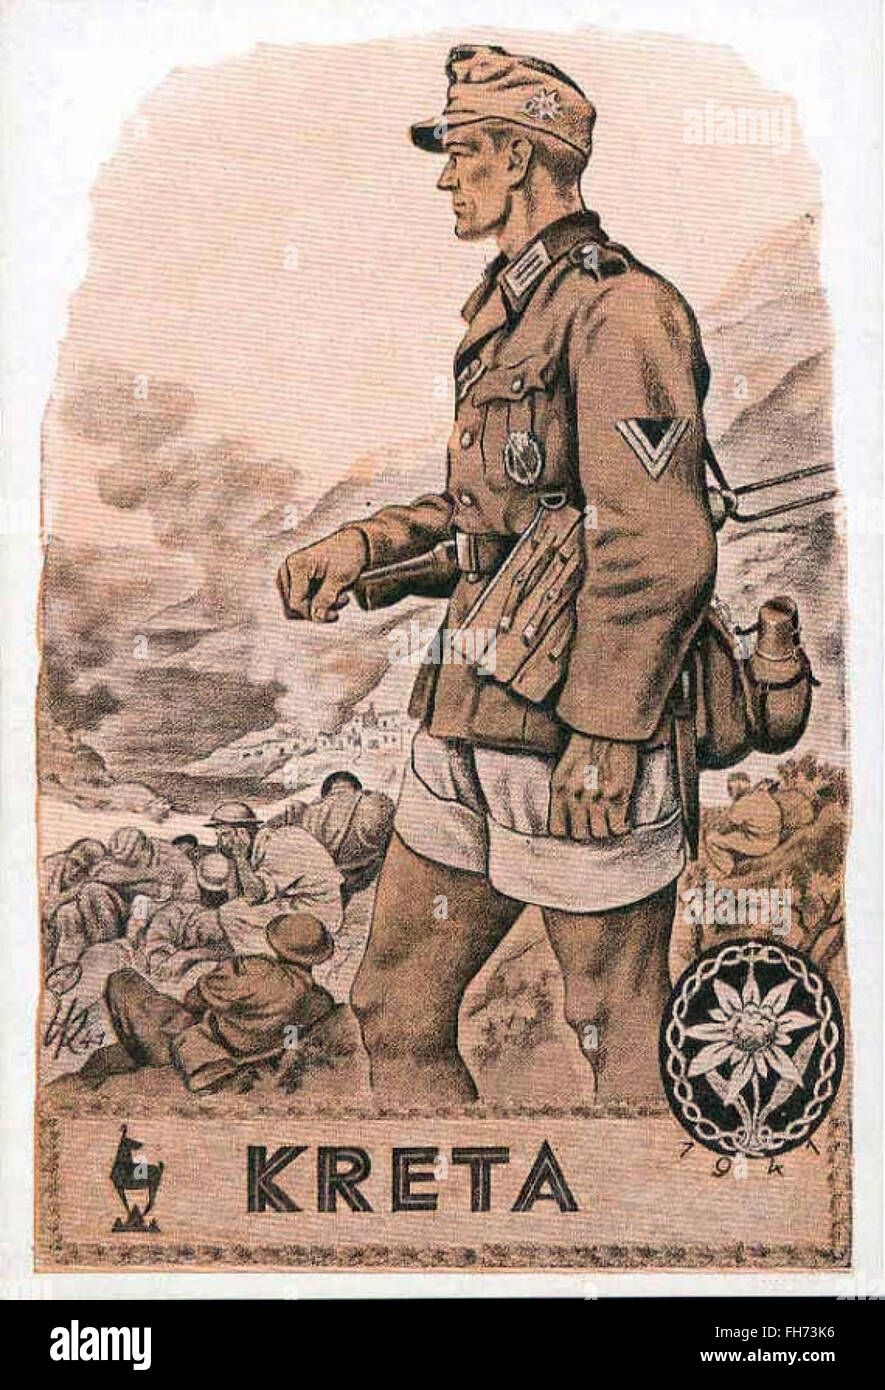 Kreta - Crete - German Nazi Propaganda Poster - WWII Stock Photo